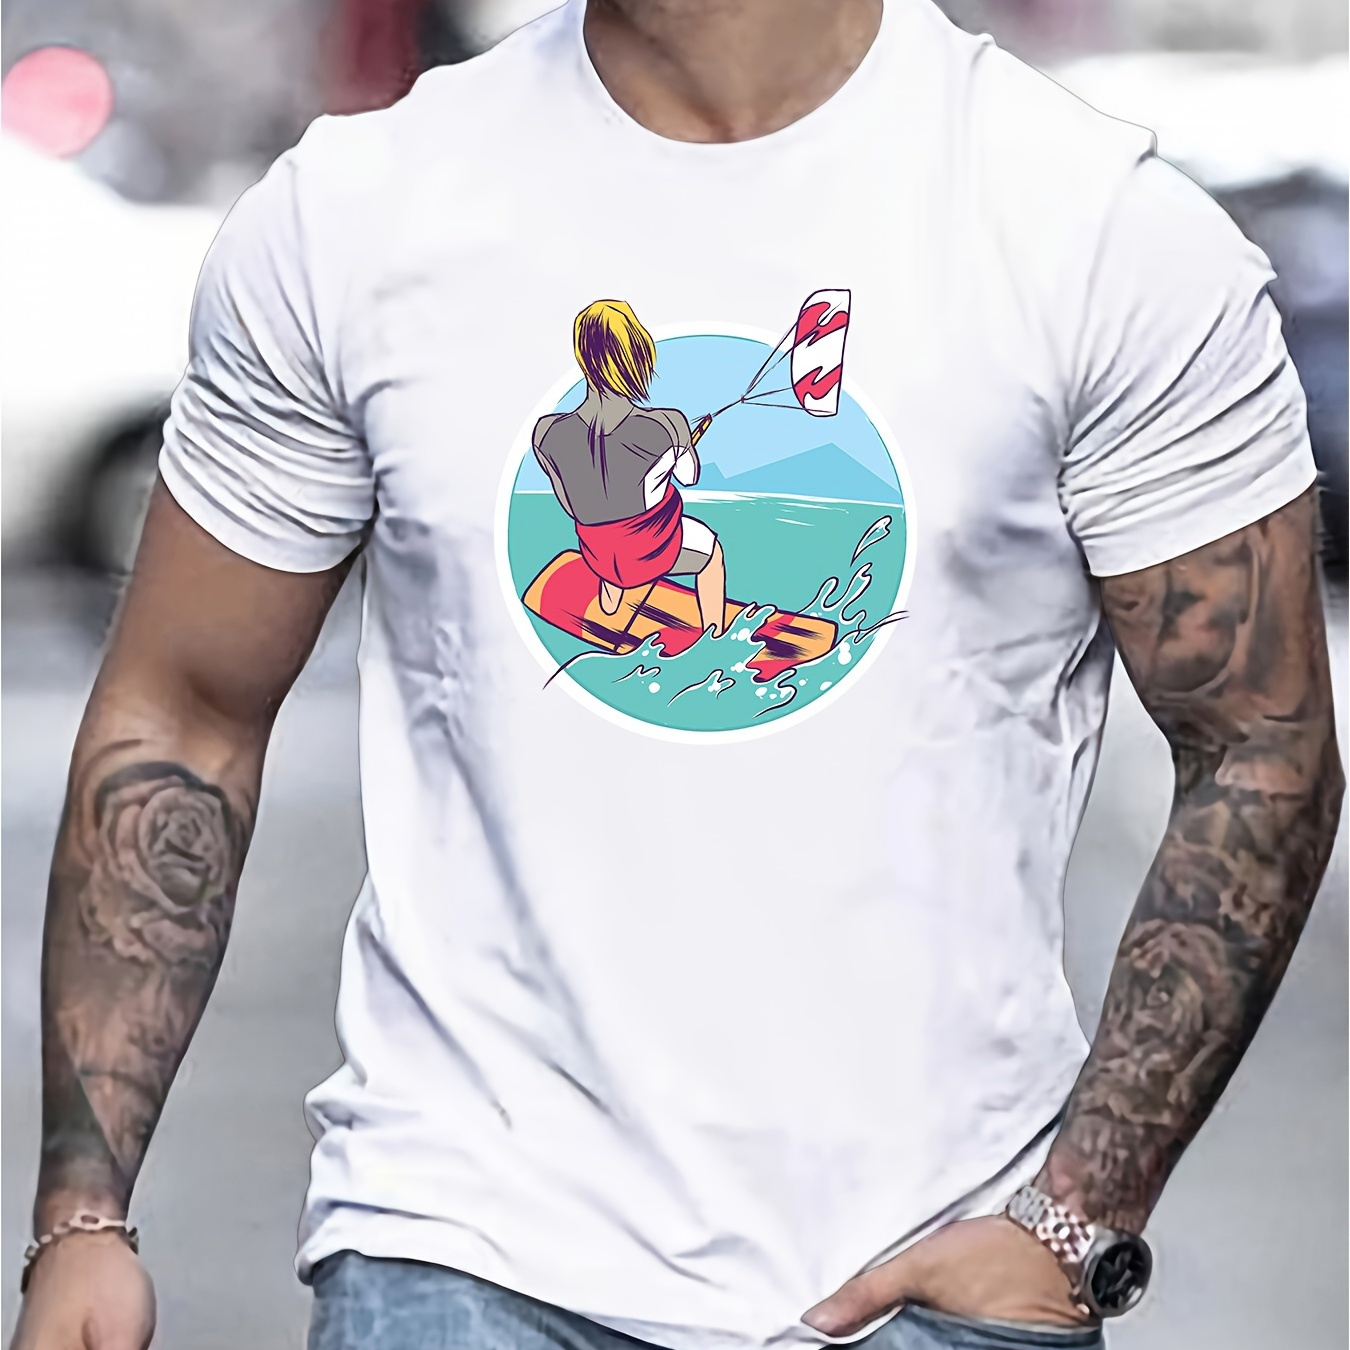 

Kite Surfing Print Tee Shirt, Tees For Men, Casual Short Sleeve T-shirt For Summer